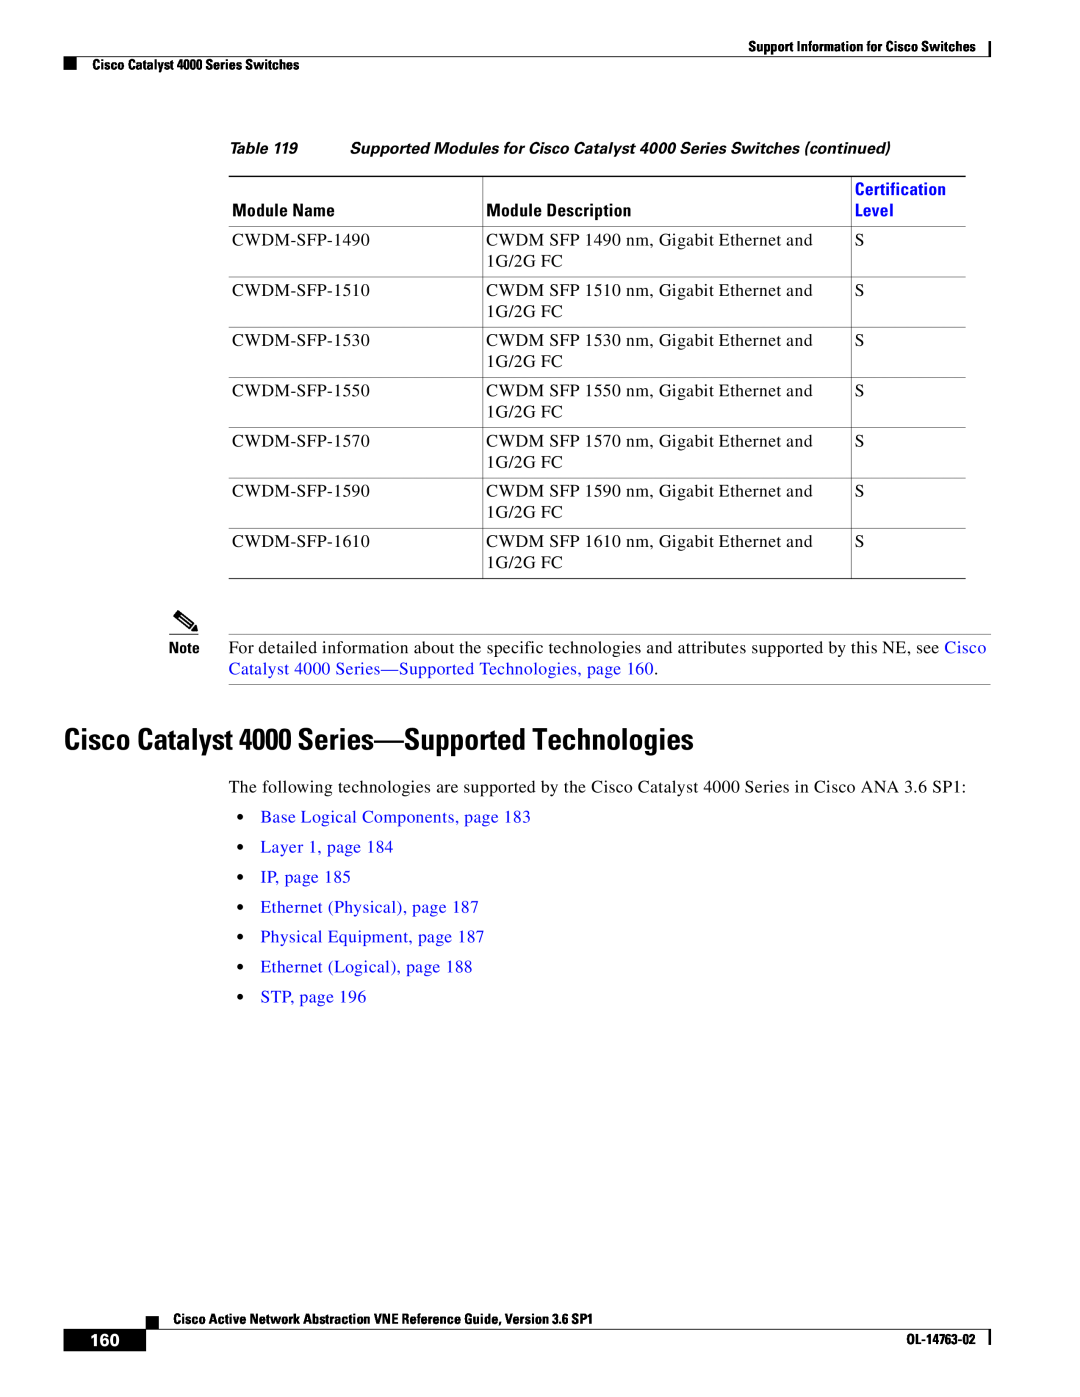 Cisco Systems OL-14763-02 manual Cisco Catalyst 4000 Series-Supported Technologies, Module Name, Module Description 